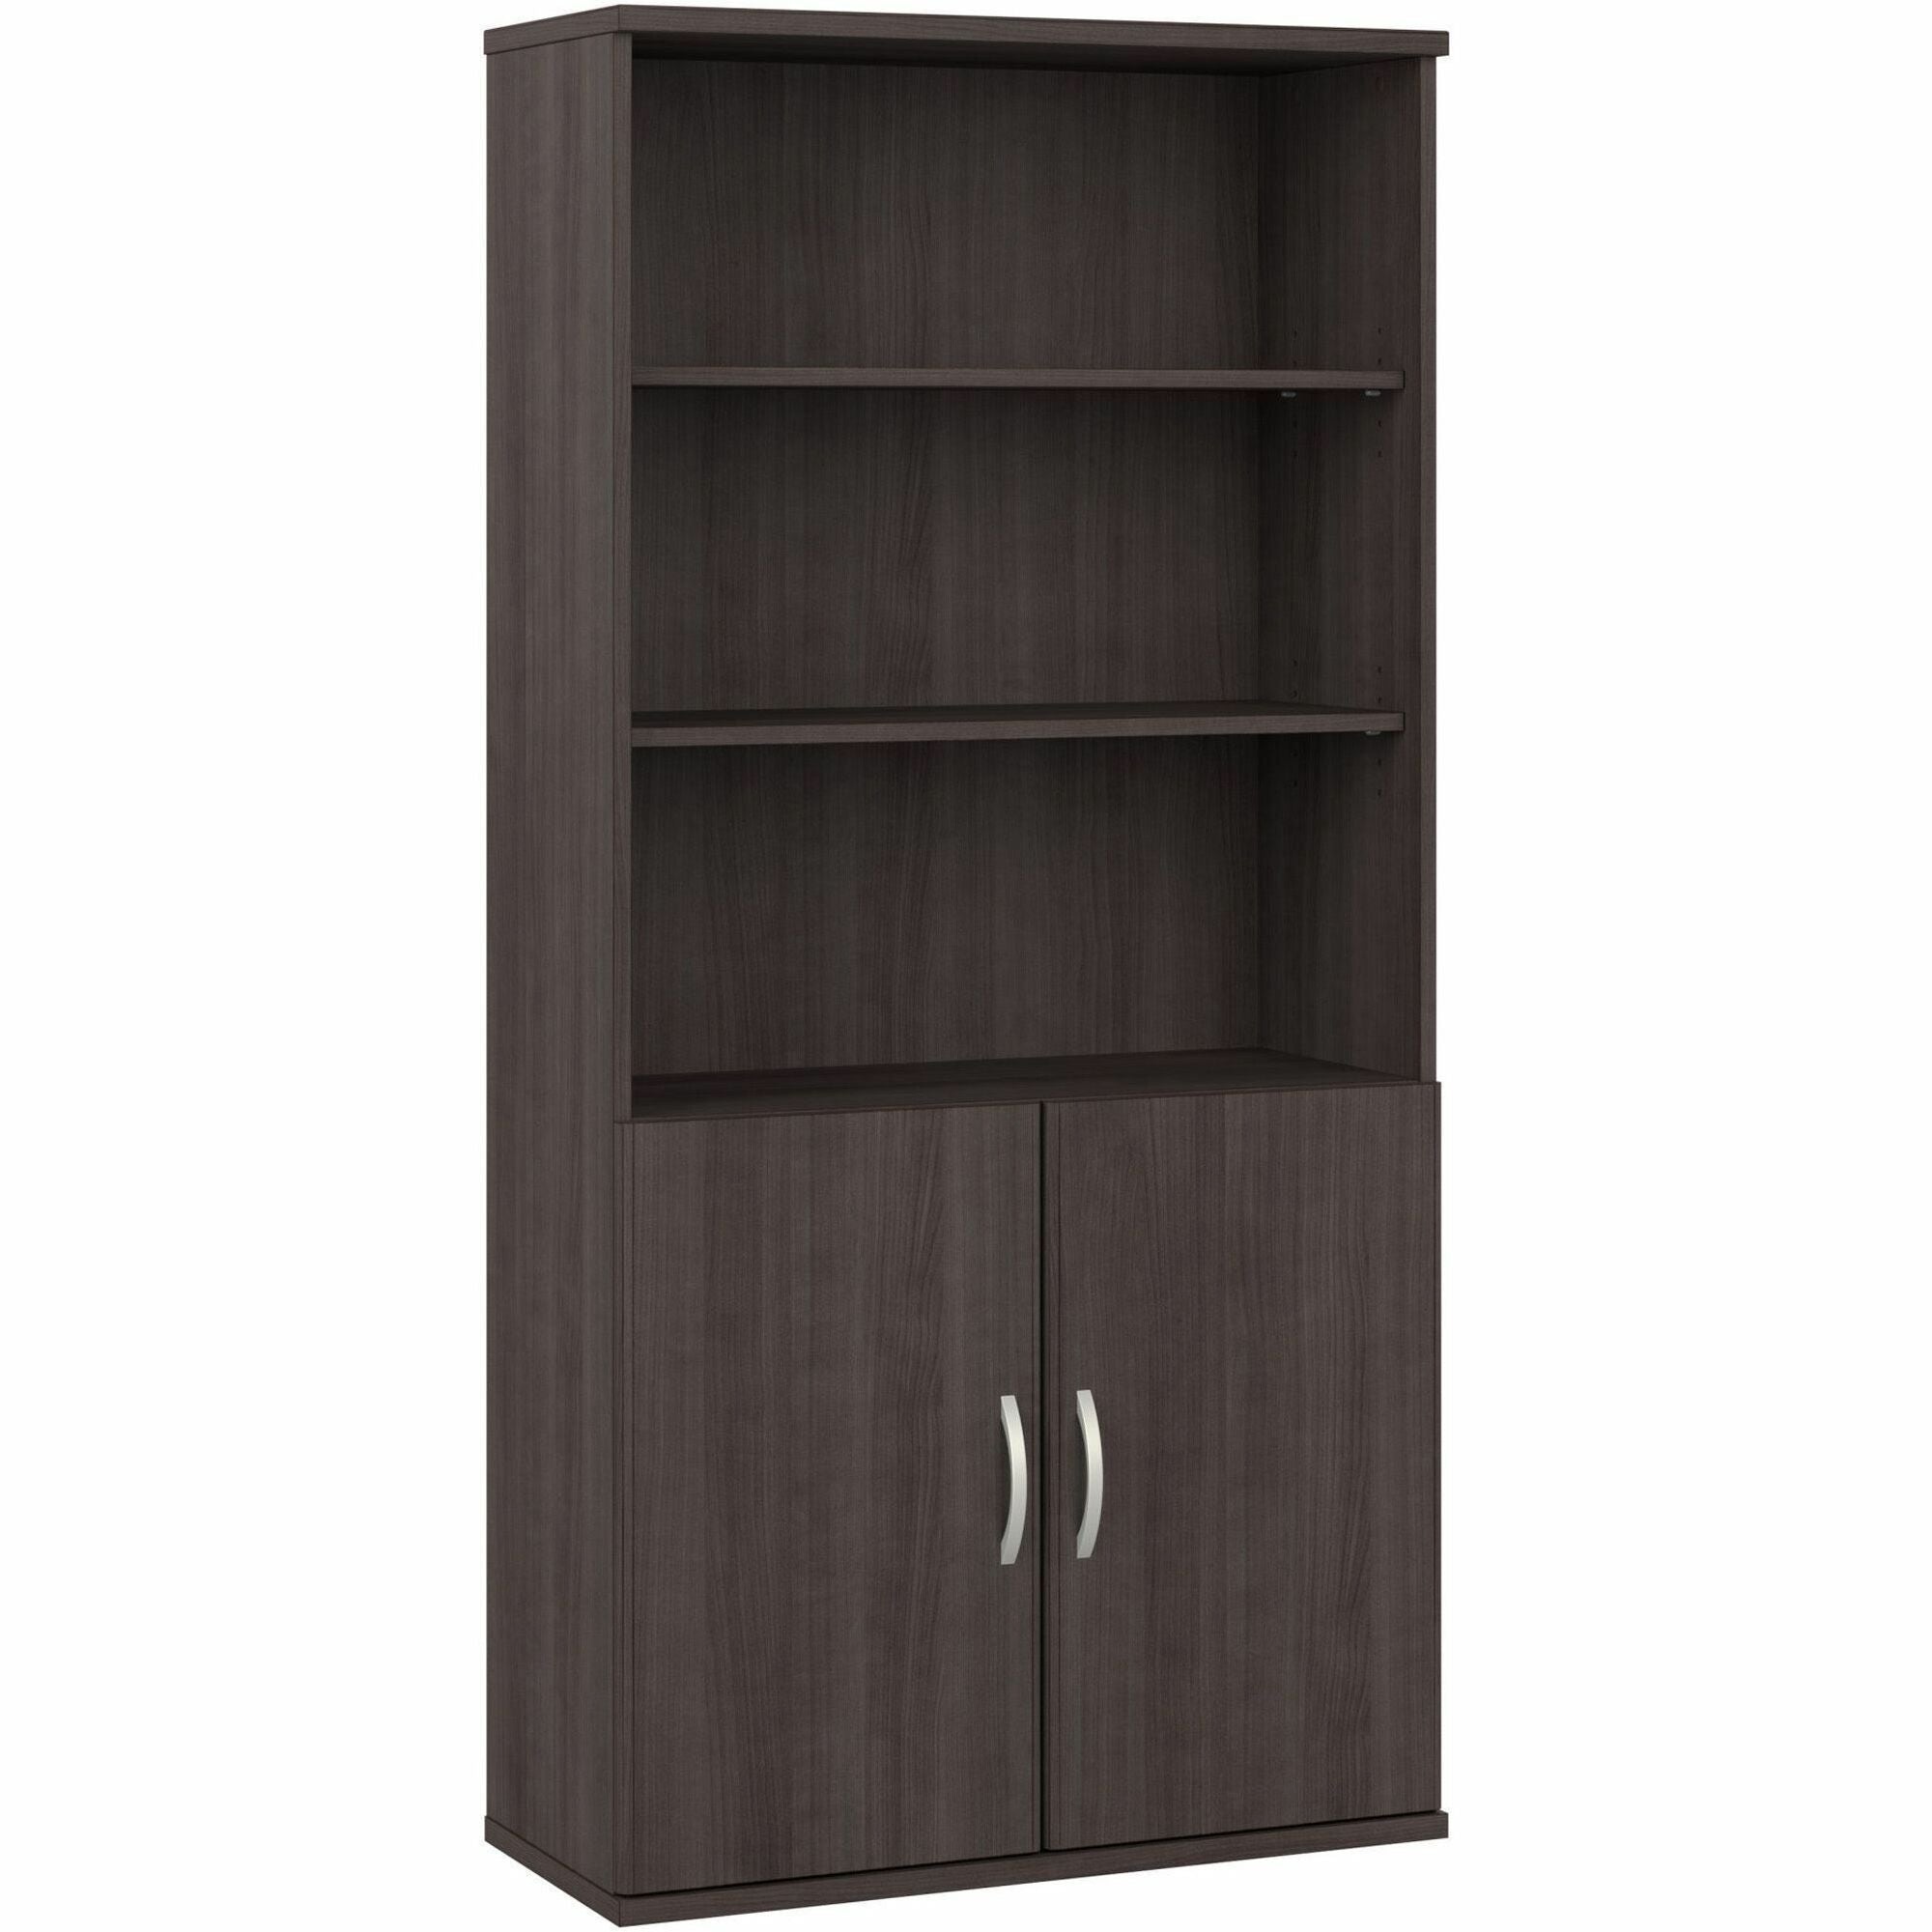 Bush Business Furniture Studio C 5 Shelf Bookcase with Doors - 36"72" Bookcase - 2 Door(s) - 5 Shelve(s) - 3 Adjustable Shelf(ves) - Finish: Storm Gray, Thermofused Laminate (TFL) - 1